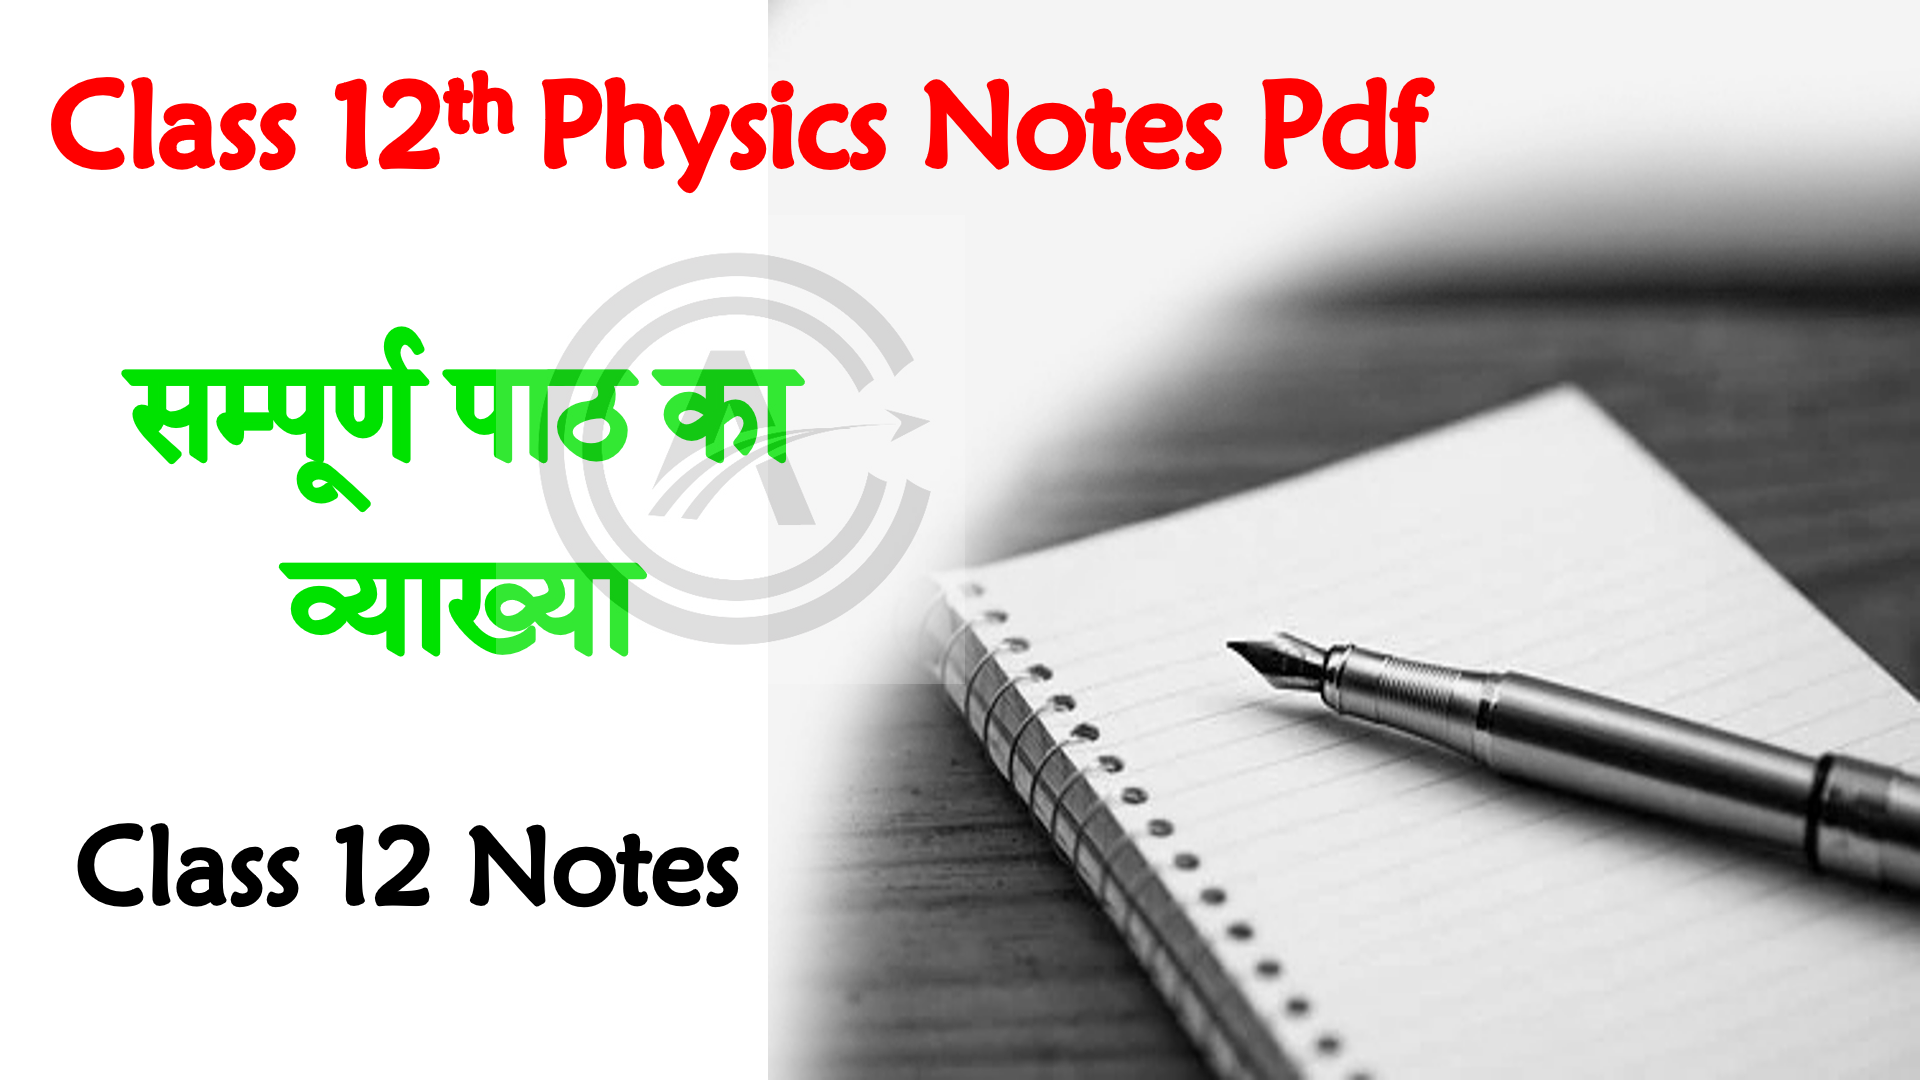 Bihar Board Class 12th Physics Notes in Hindi